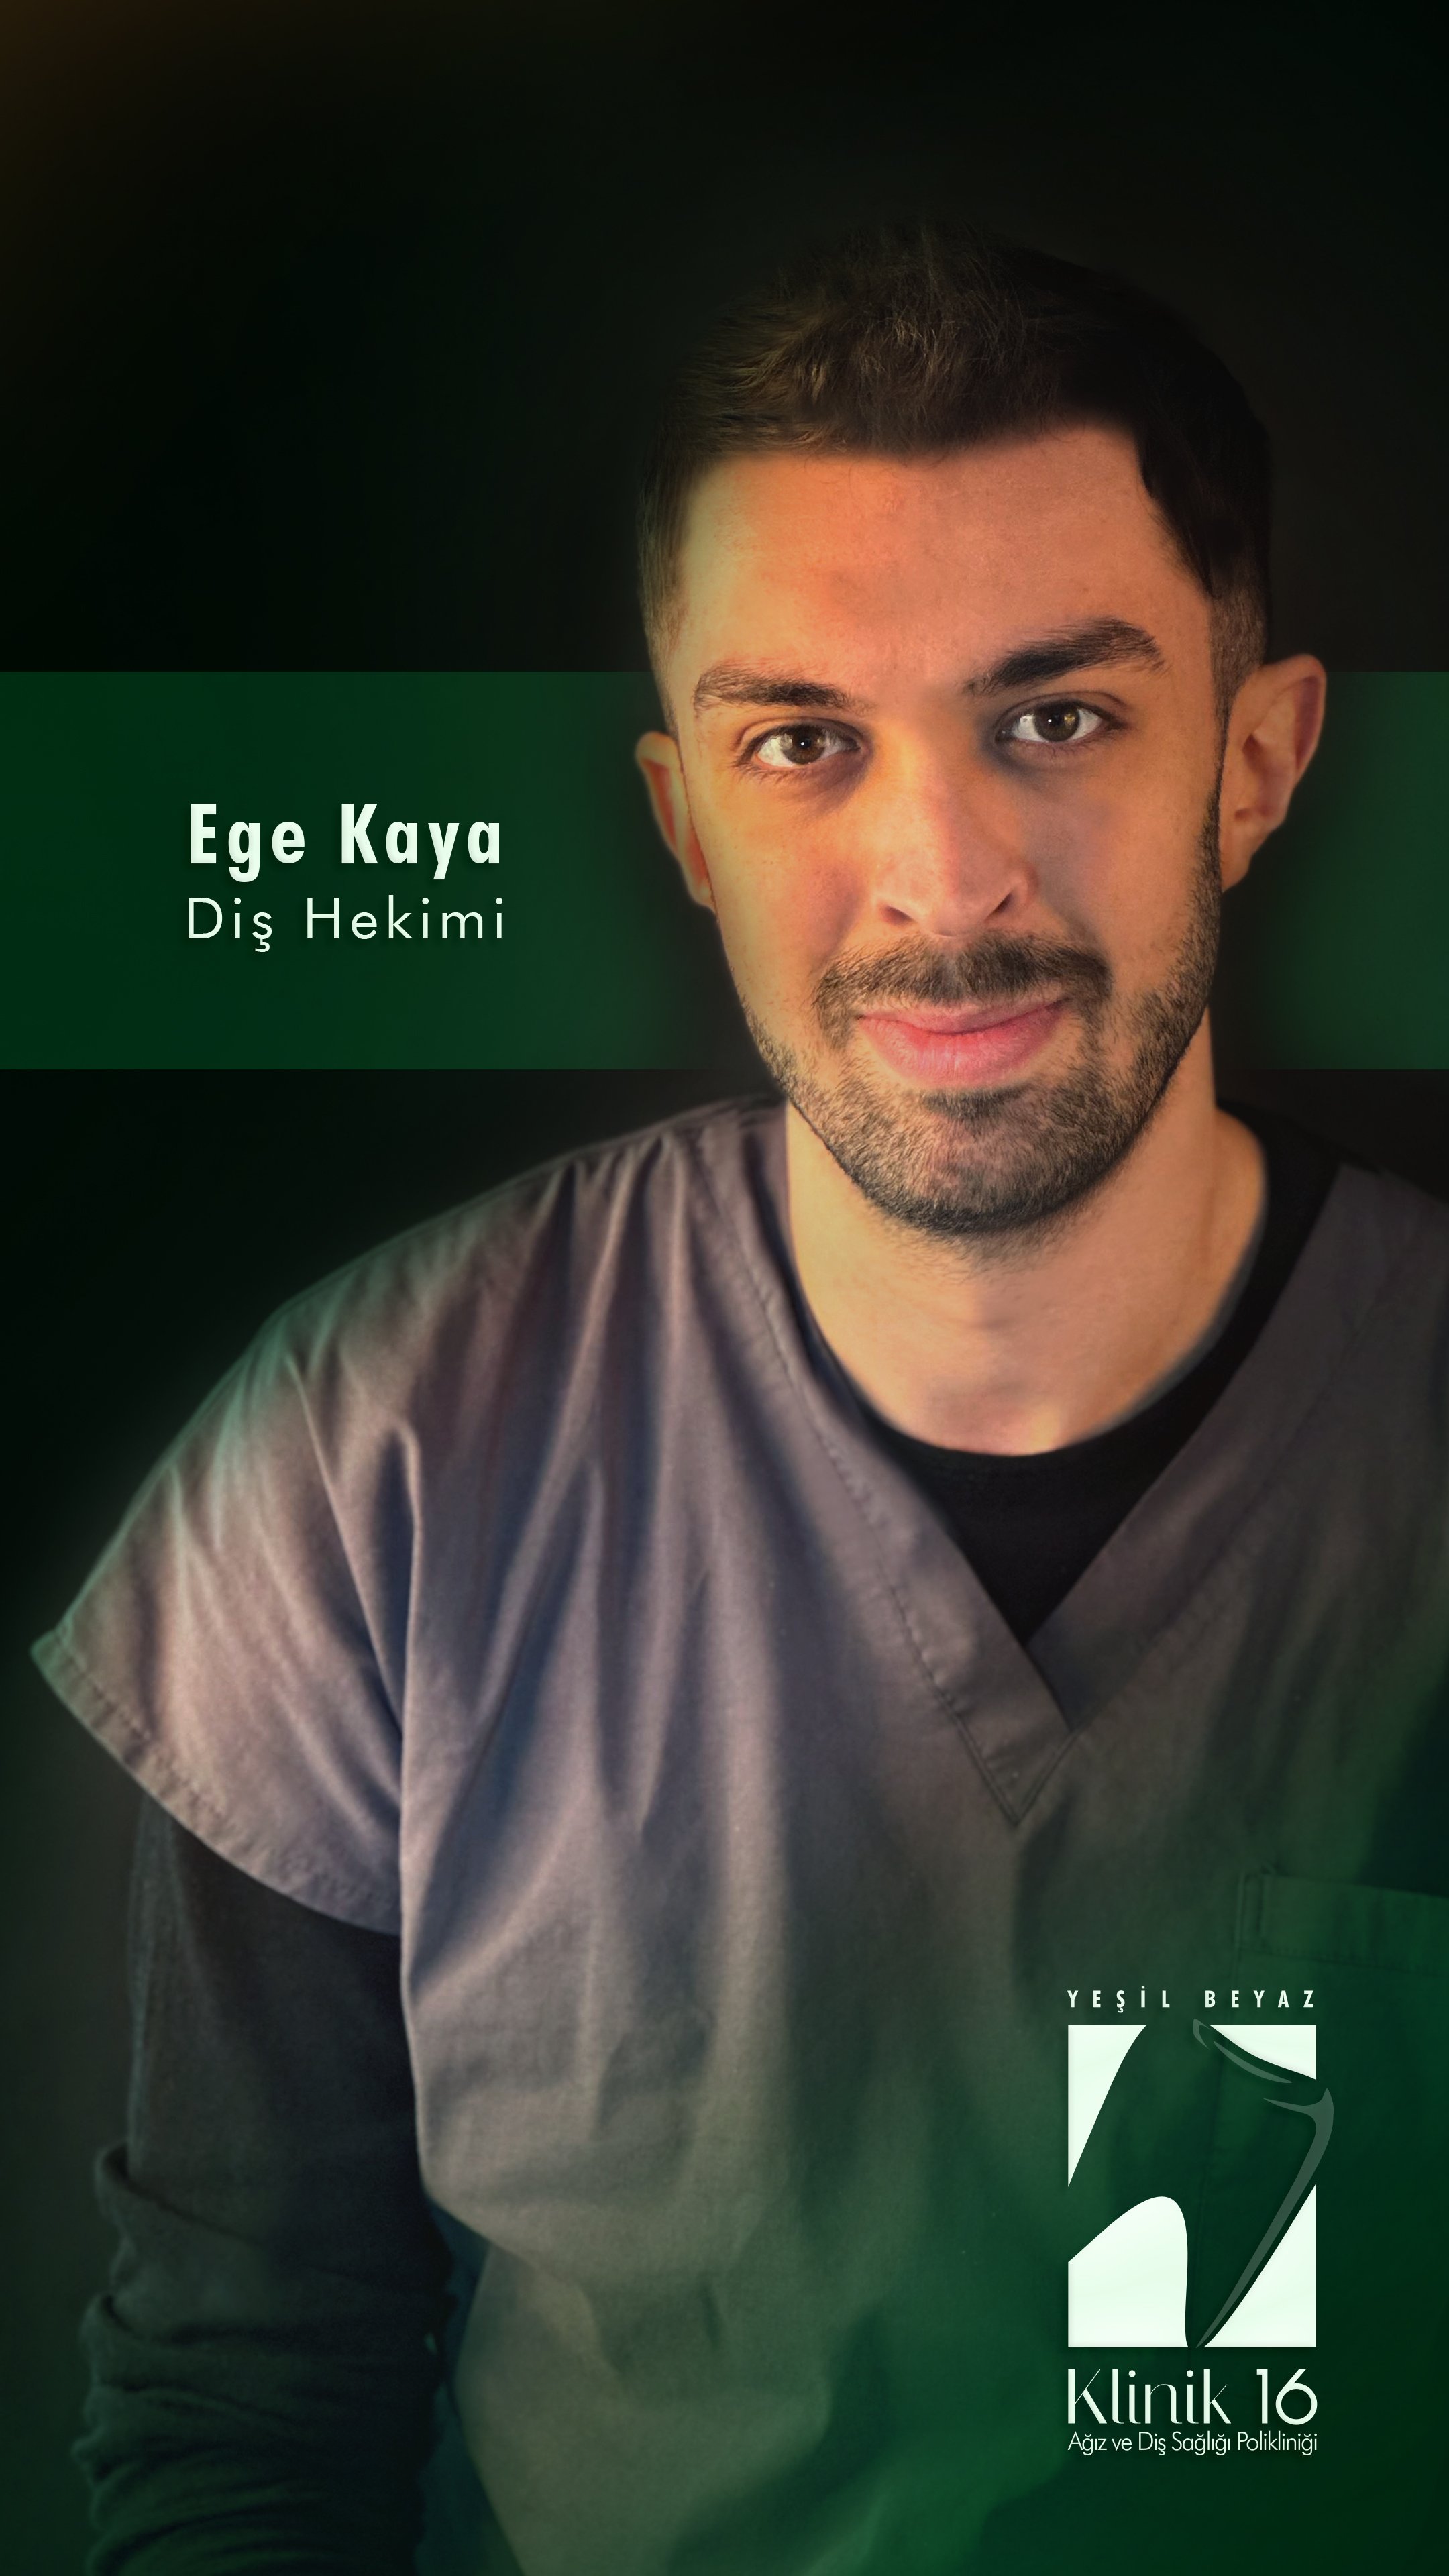 Dr. Ege Kaya